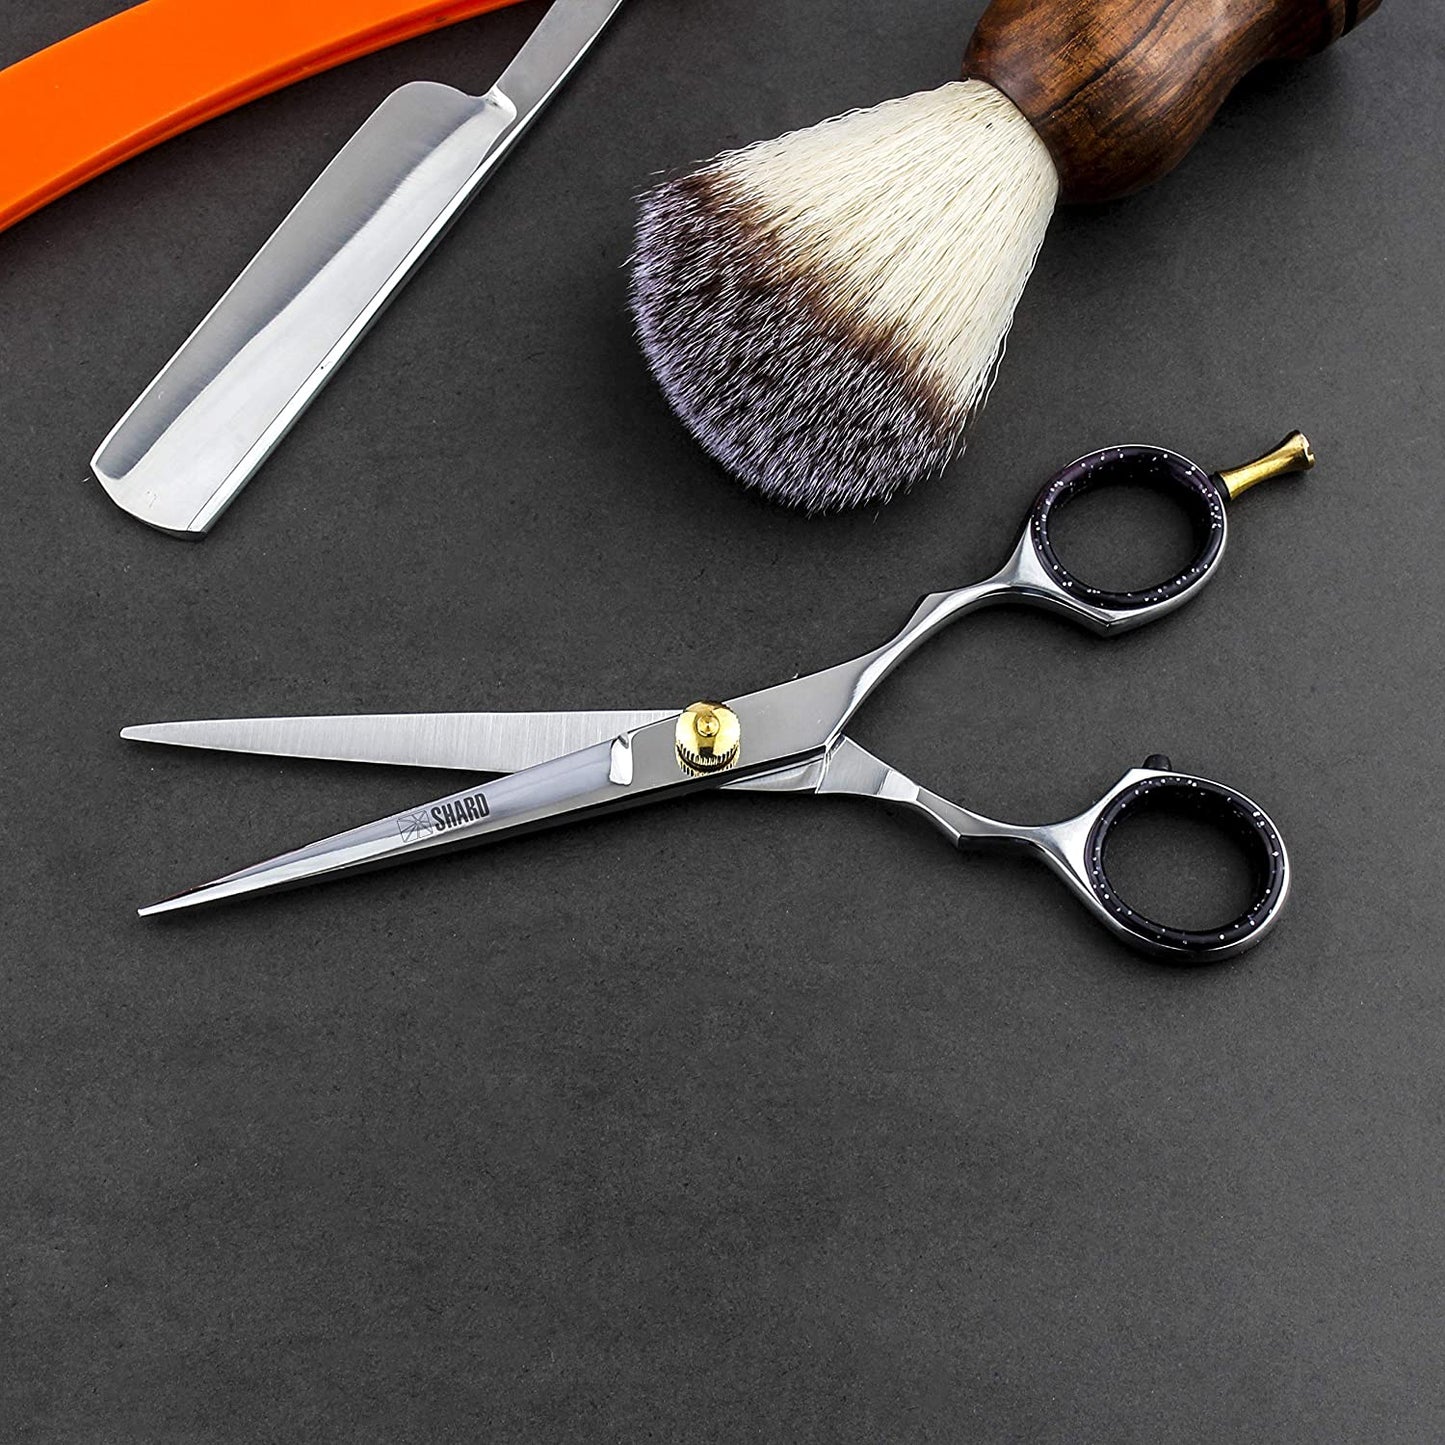 SHARD Hair Scissors- Professional Barber Hair Cutting Hairdressing Scissors| Shears for Mustache Beard Grooming Trimming